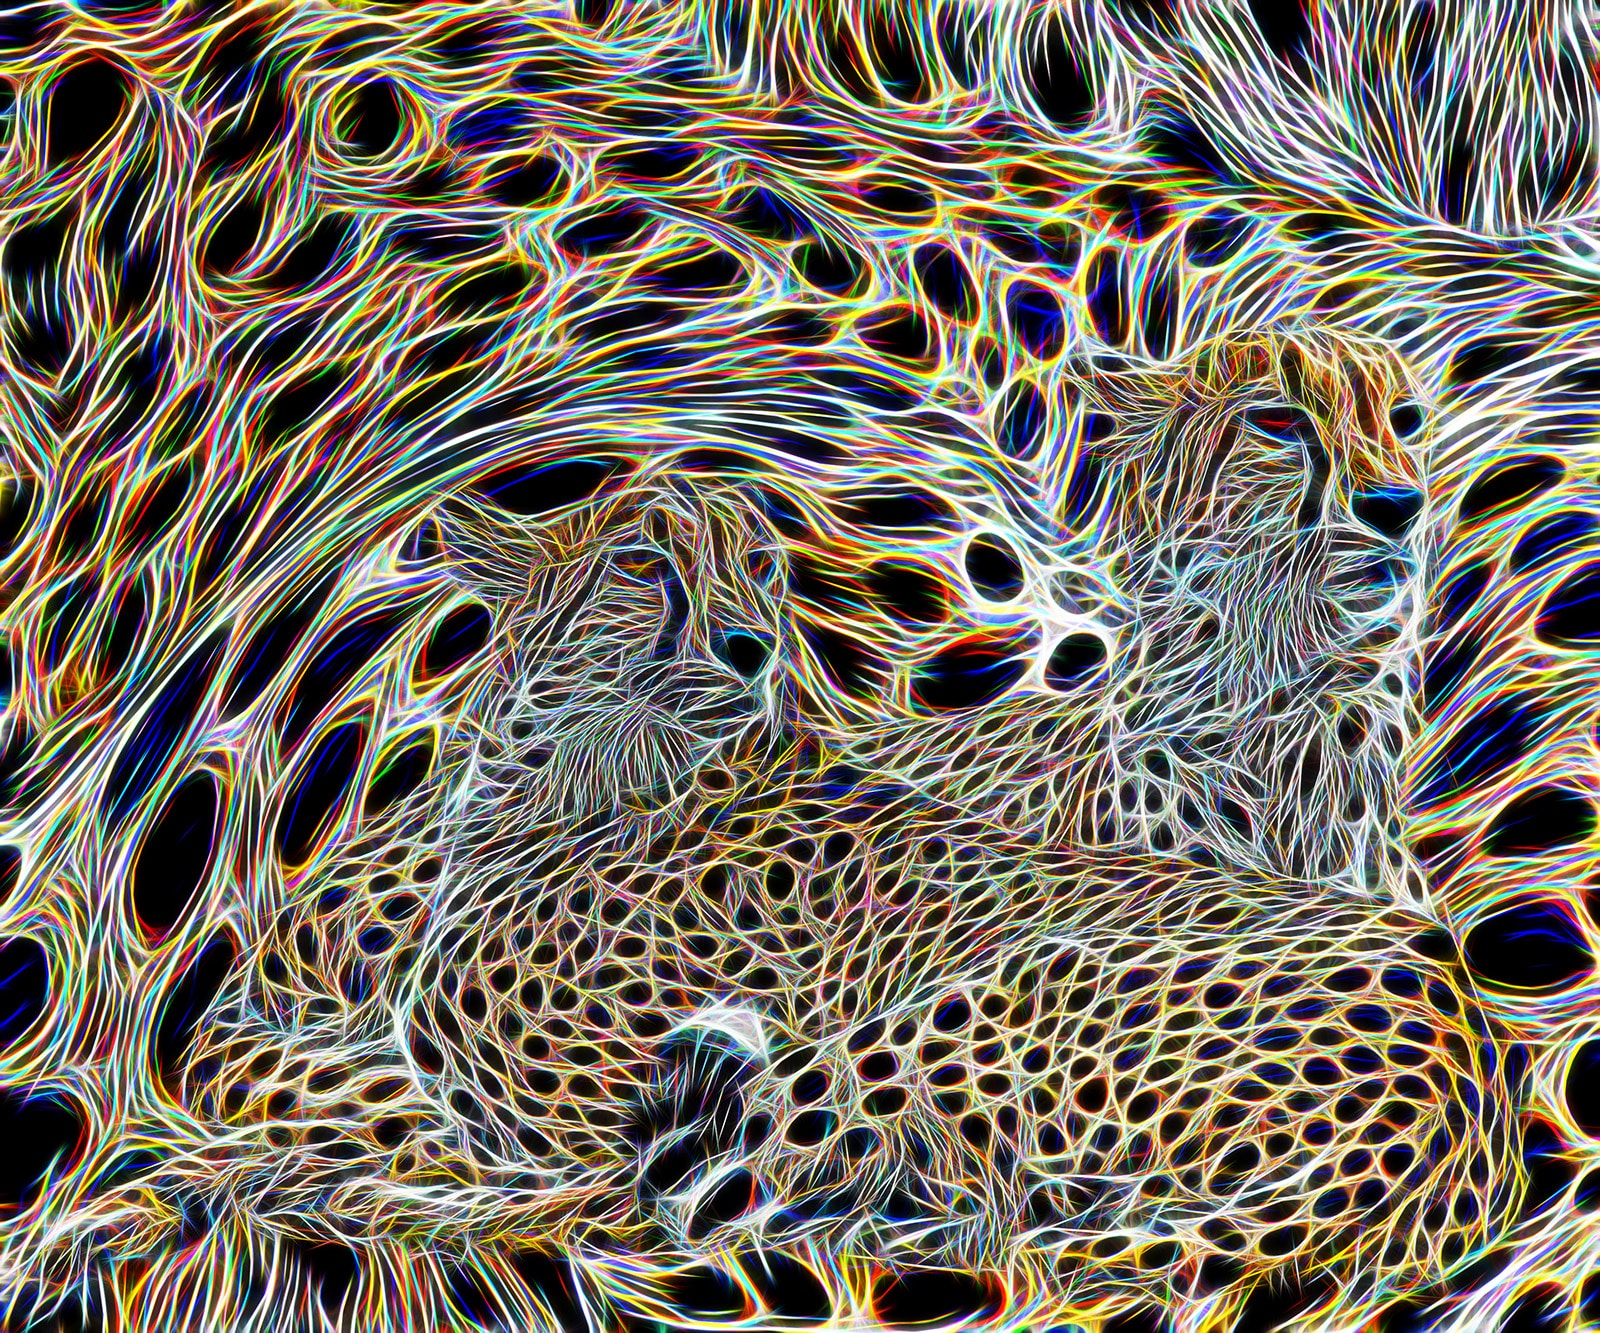 "Cheeta" Sublimation on Aluminum by Howard Harris